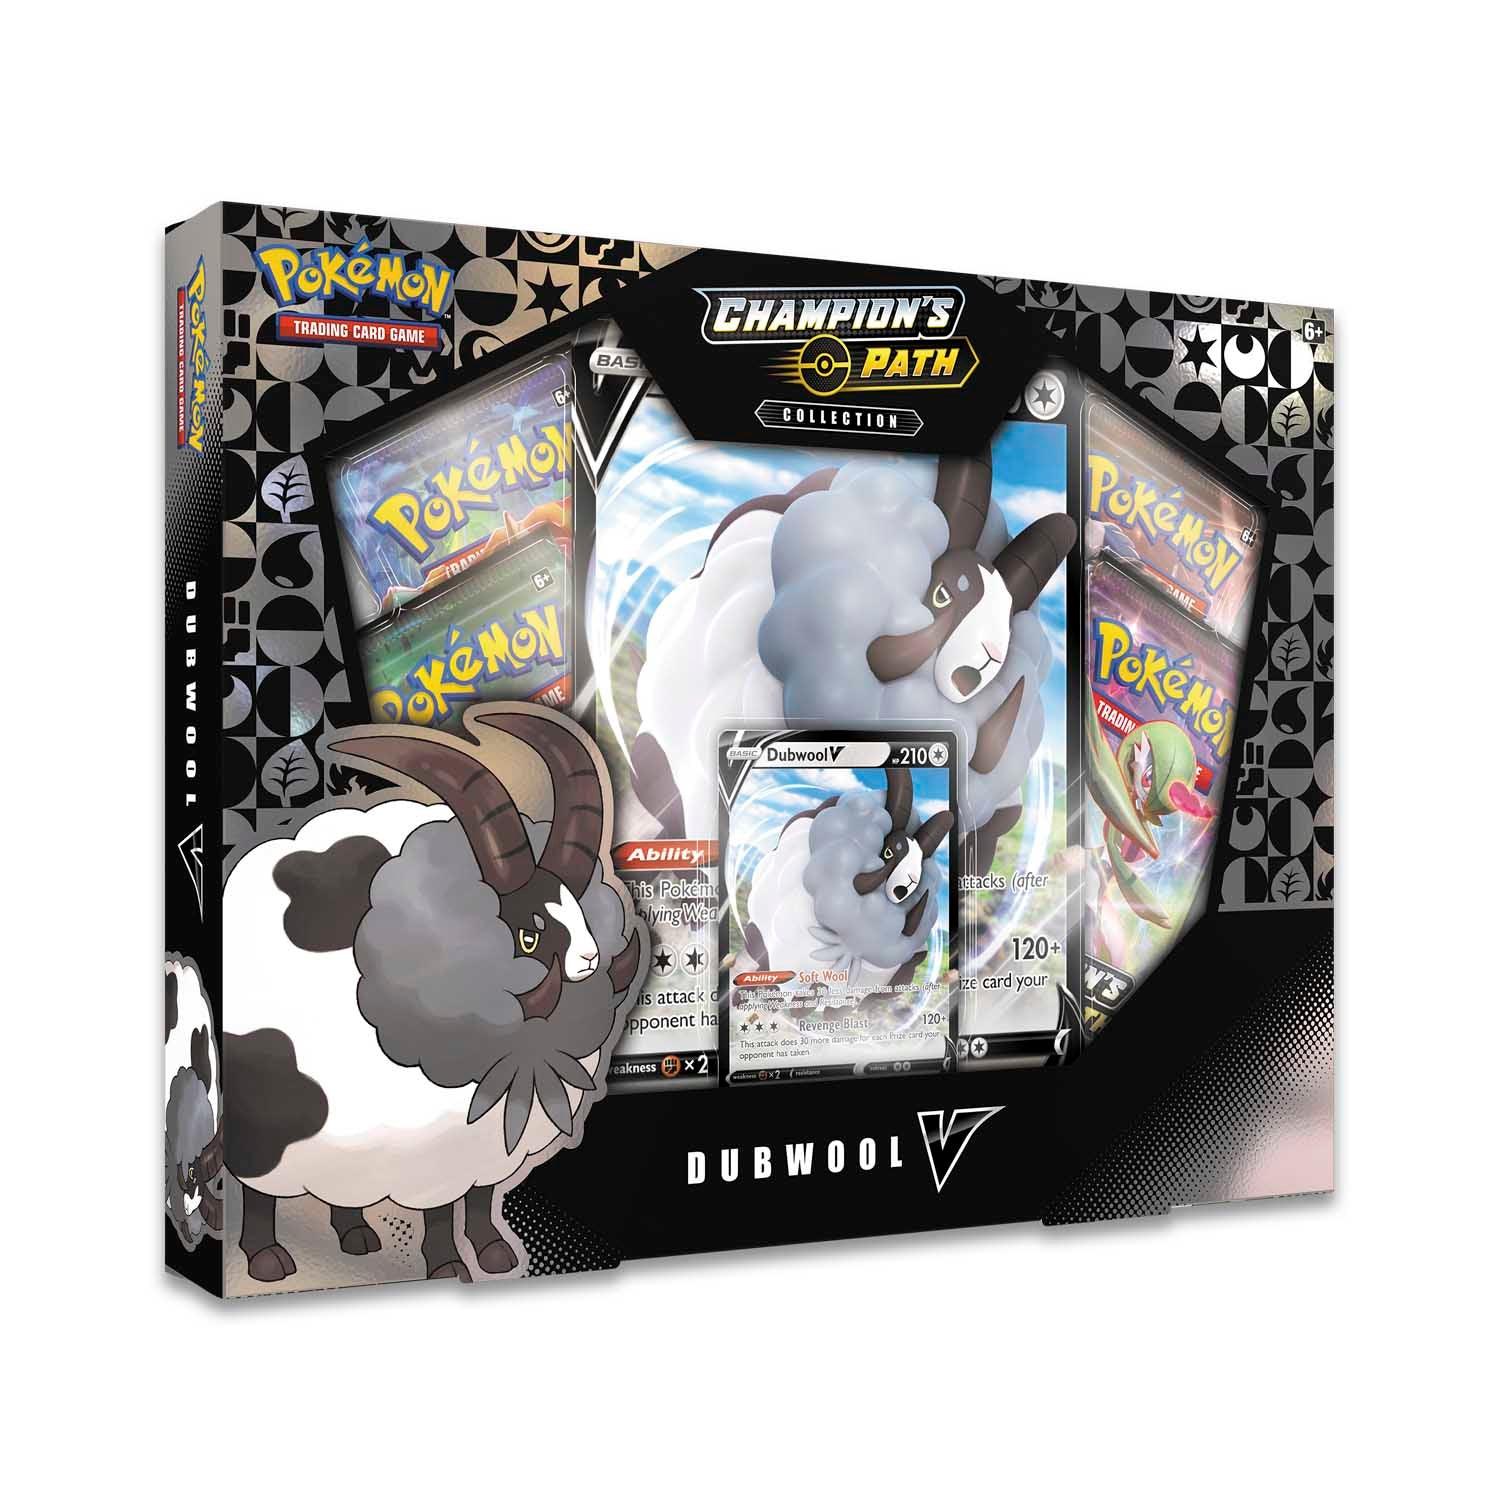 Pokemon Box - Champion's Path Collection - Dubwool V - Hobby Champion Inc